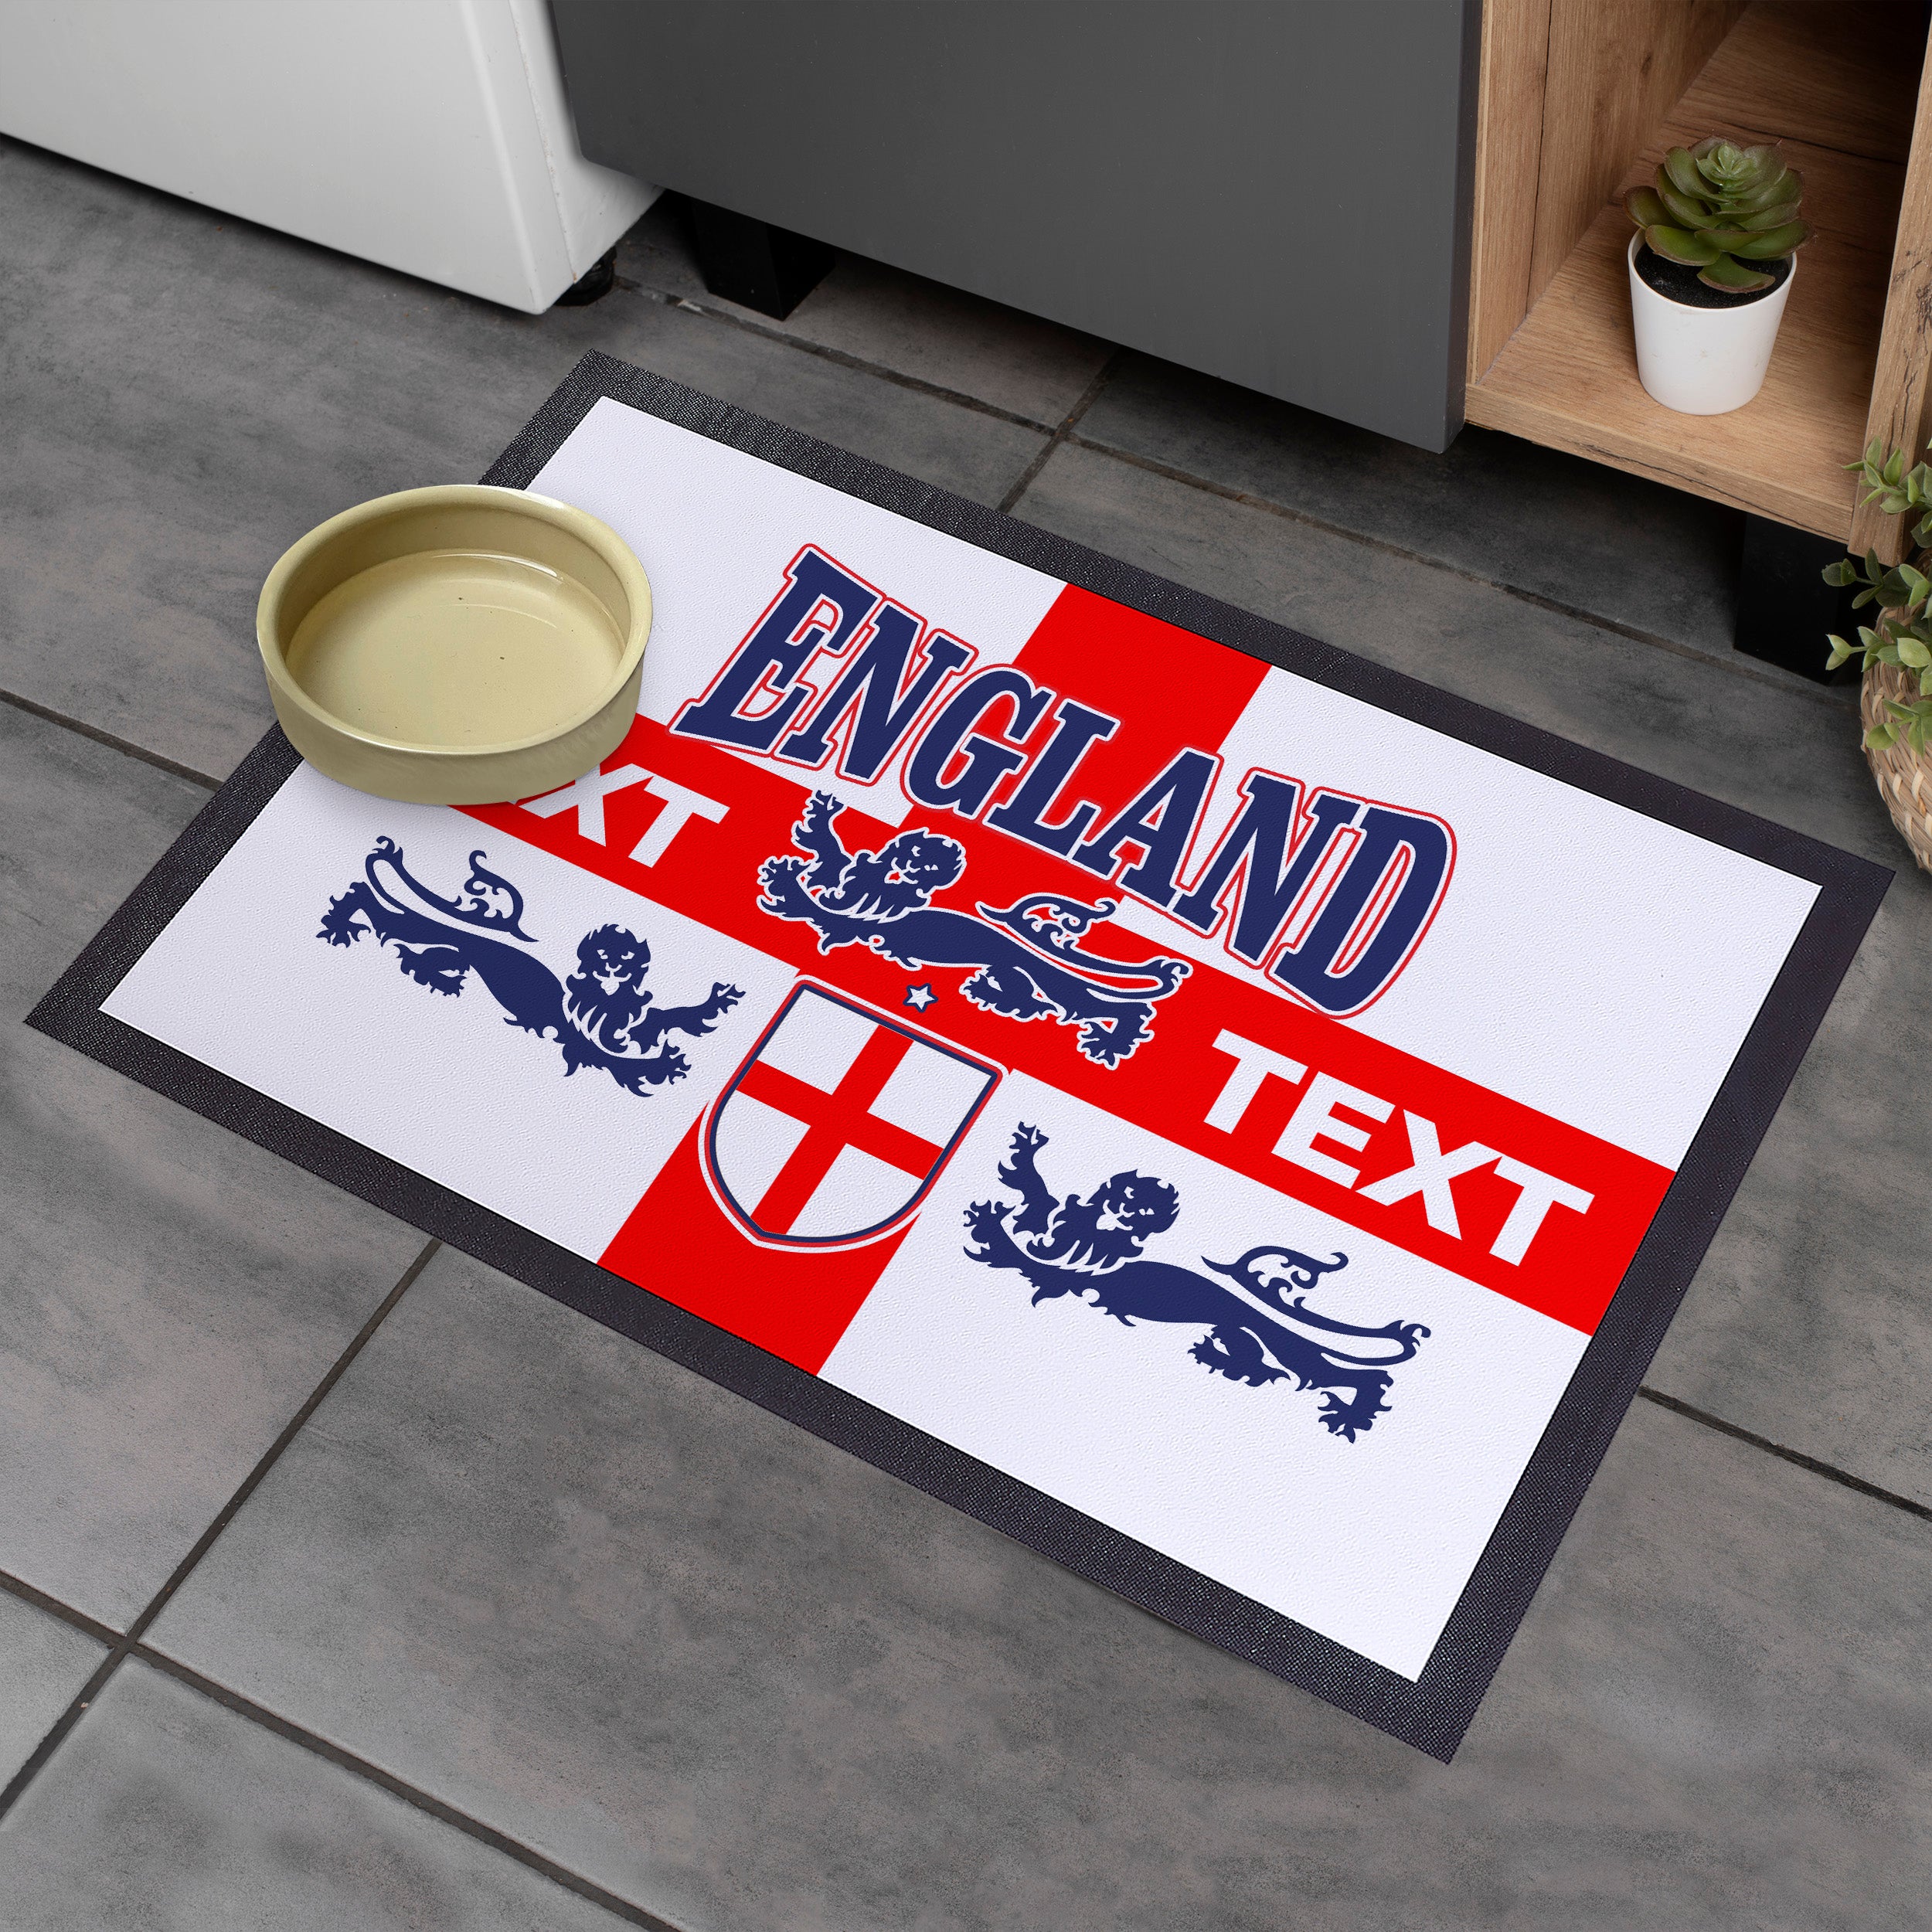 England Flag - Lions - Personalised Door Mat - 60cm x 40cm